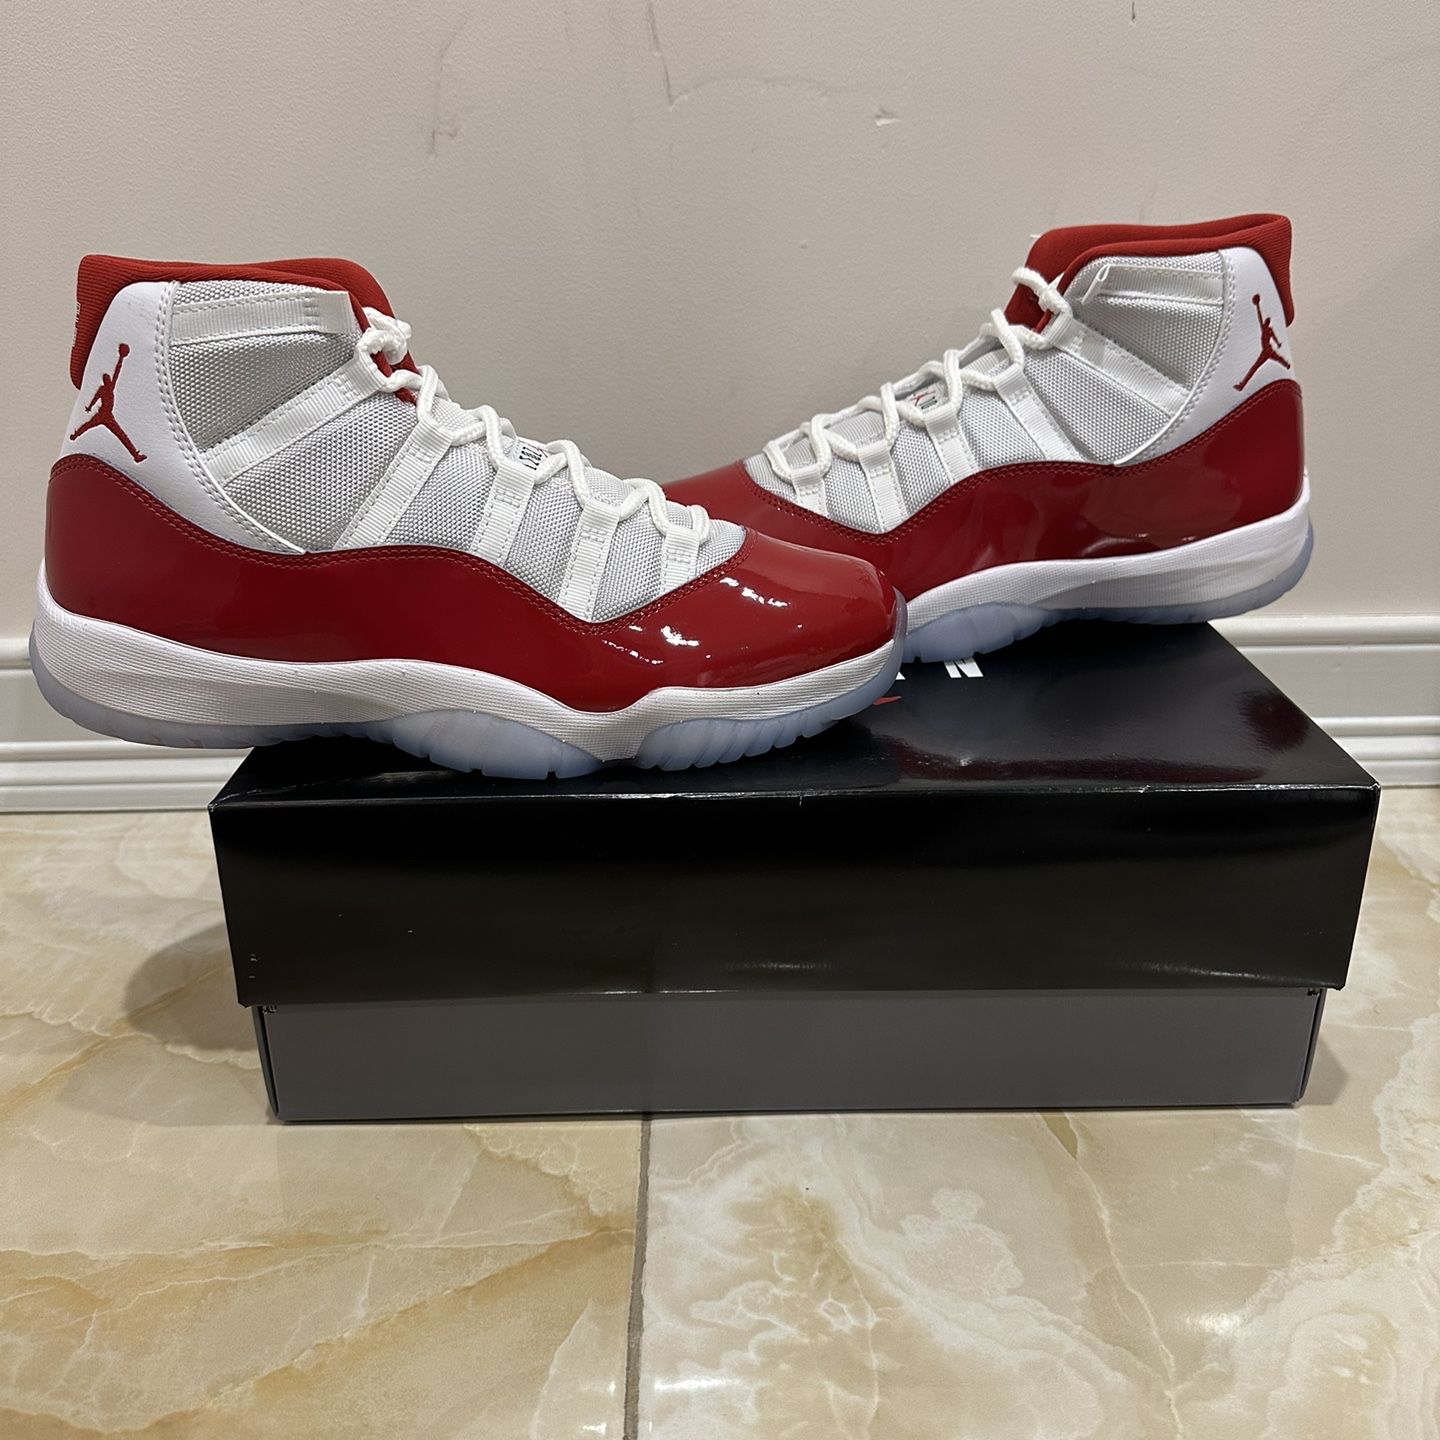 Jordan 11 Custom for Sale in Monessen, PA - OfferUp